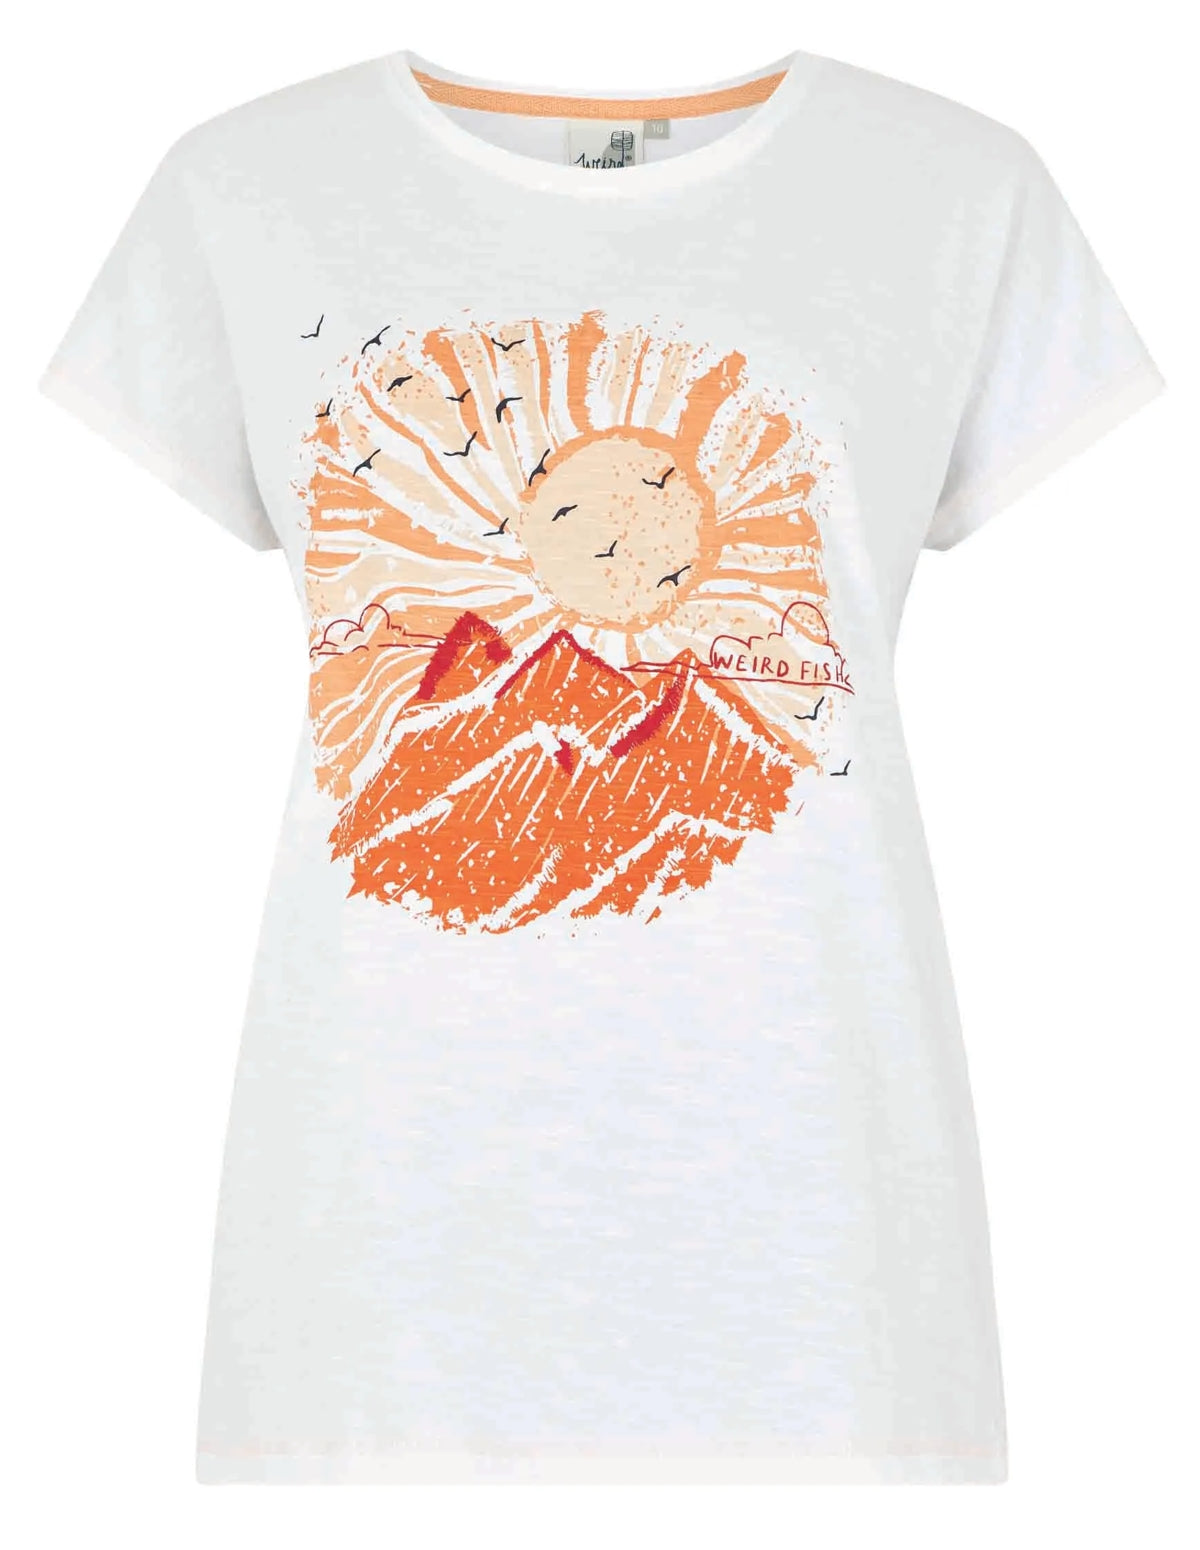 Short sleeve women's Sundown t-shirt from Weird Fish in White with orange print.